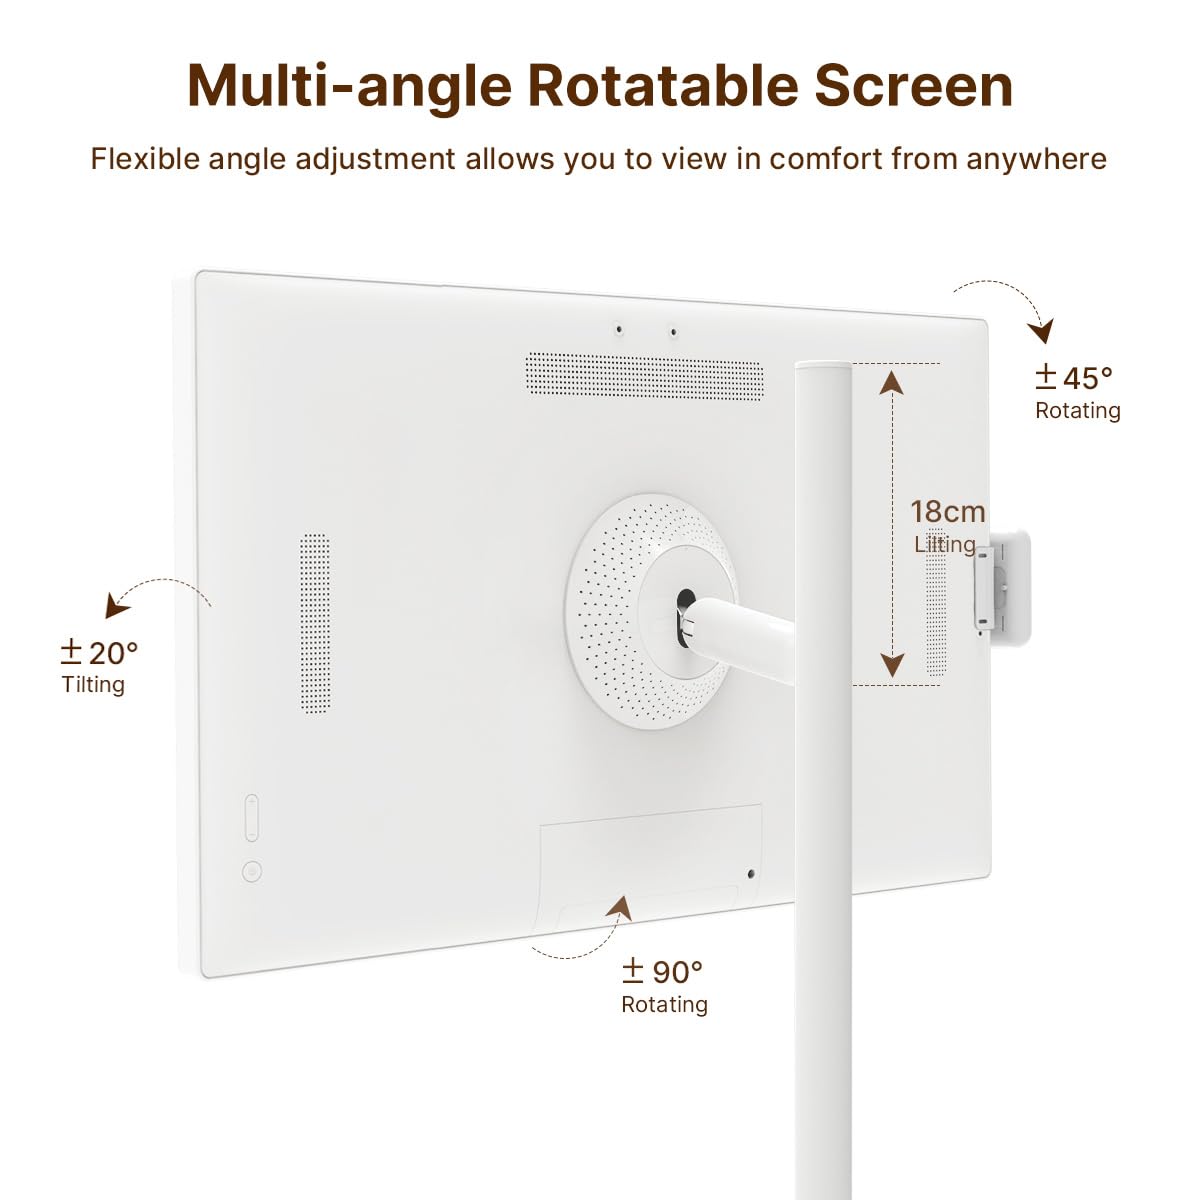 Multi-angle Rotatable Screen